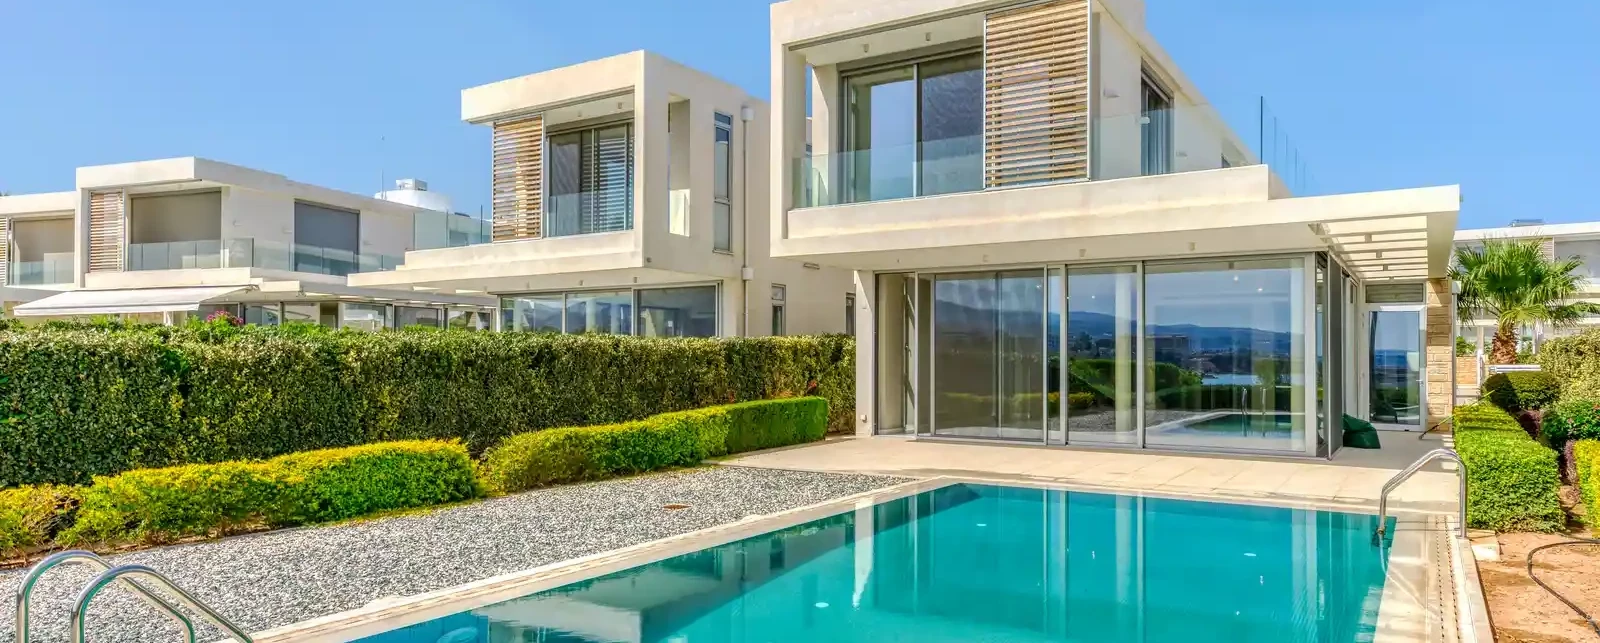 5-bedroom villa fоr sаle €3.088.000, image 1